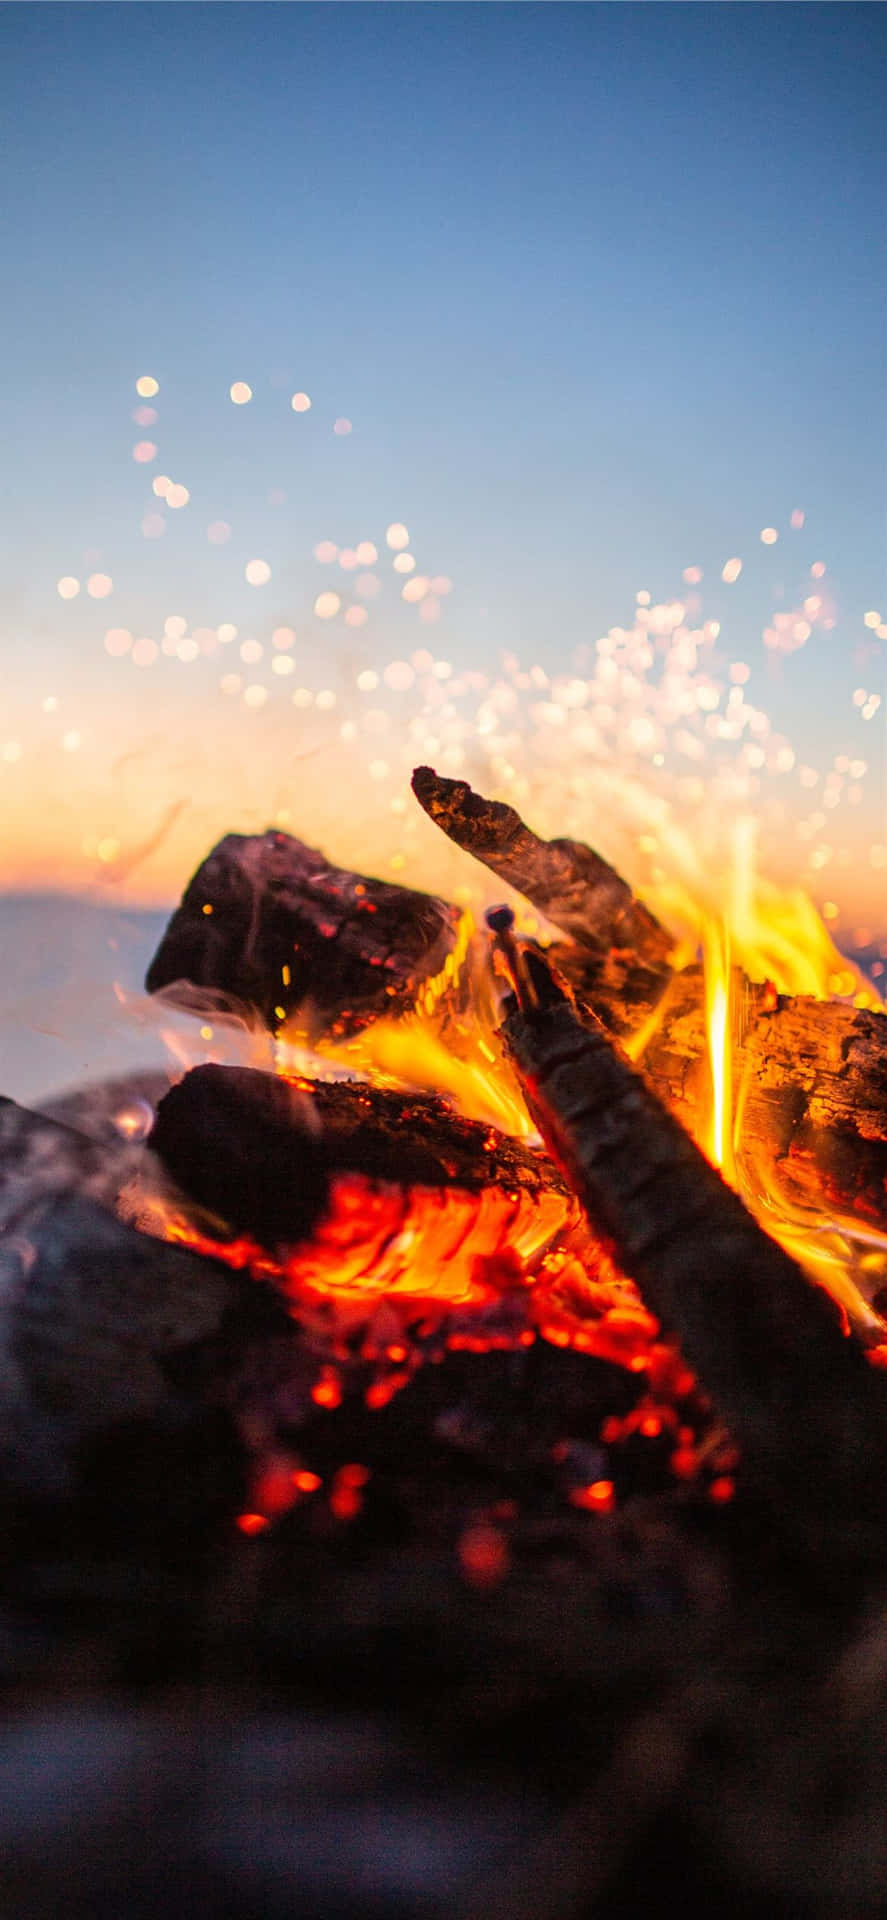 Burning Timbers Campfire Wallpaper